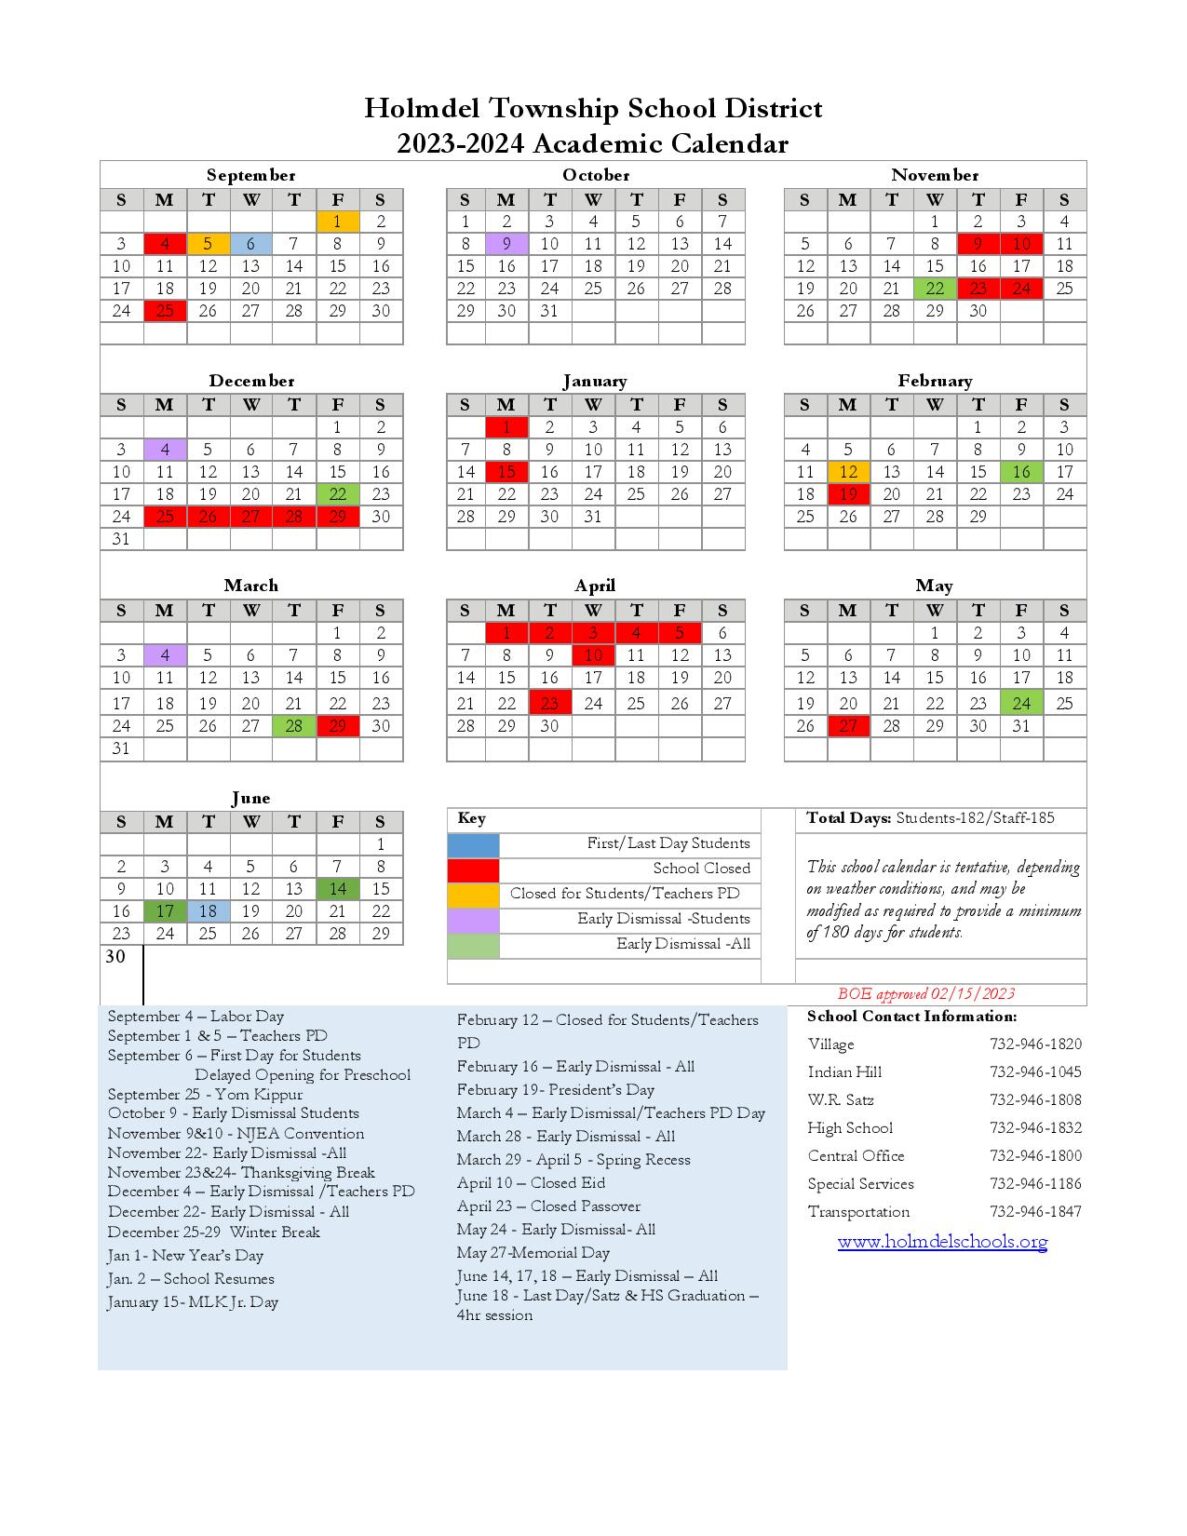 Holmdel Township Schools Calendar 20232024 (Academic Year) School